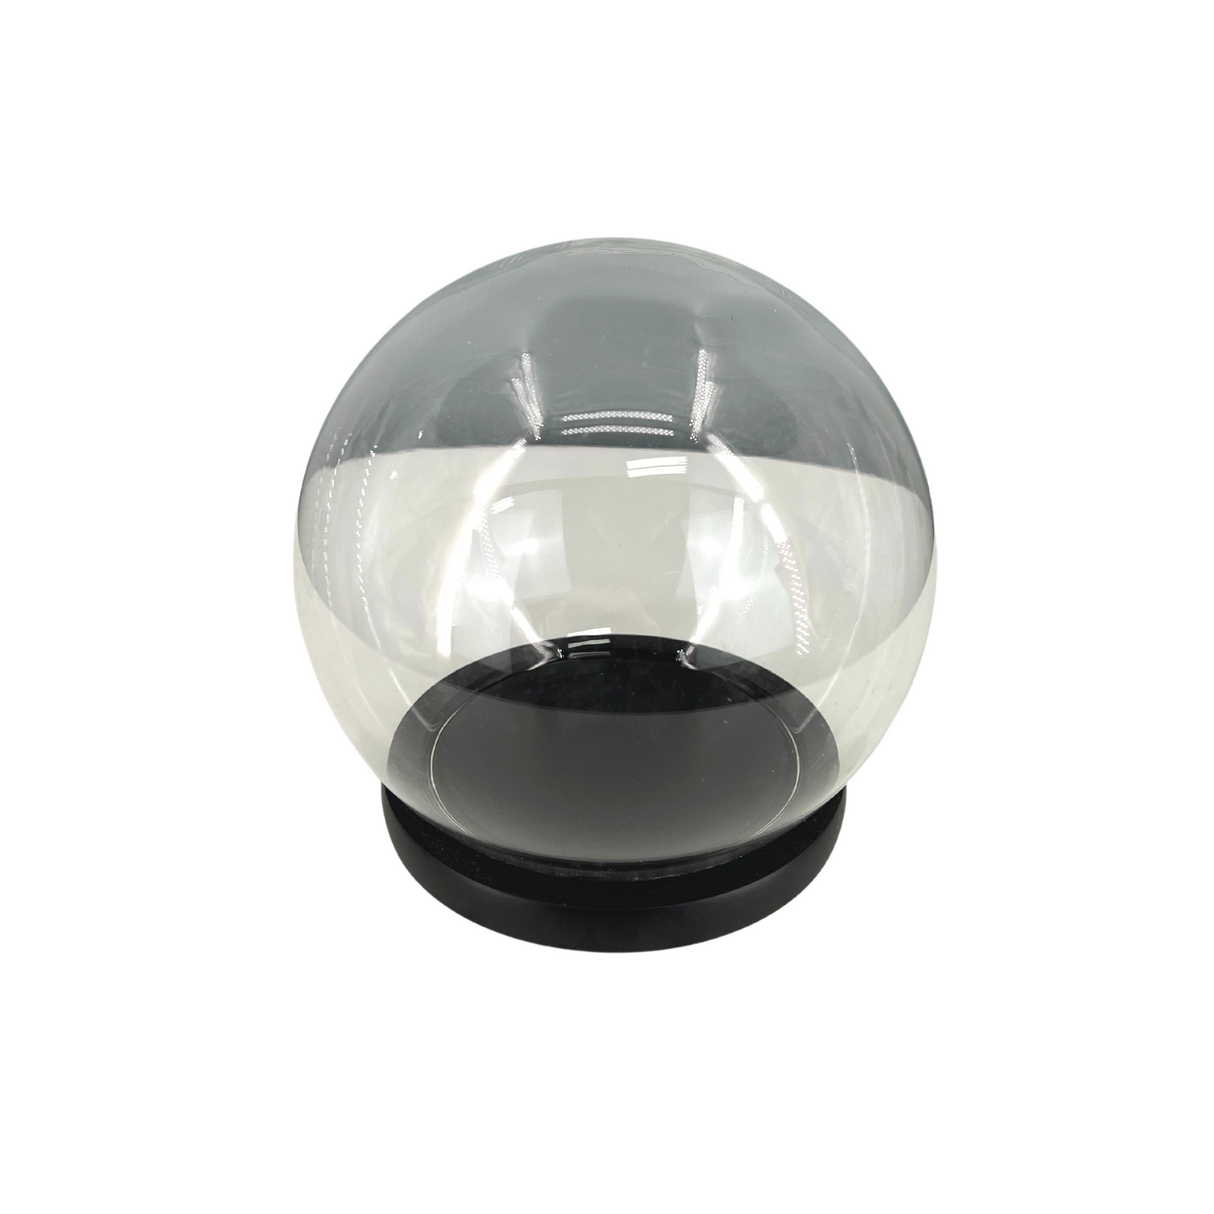 Glass R18 ball (wood base)